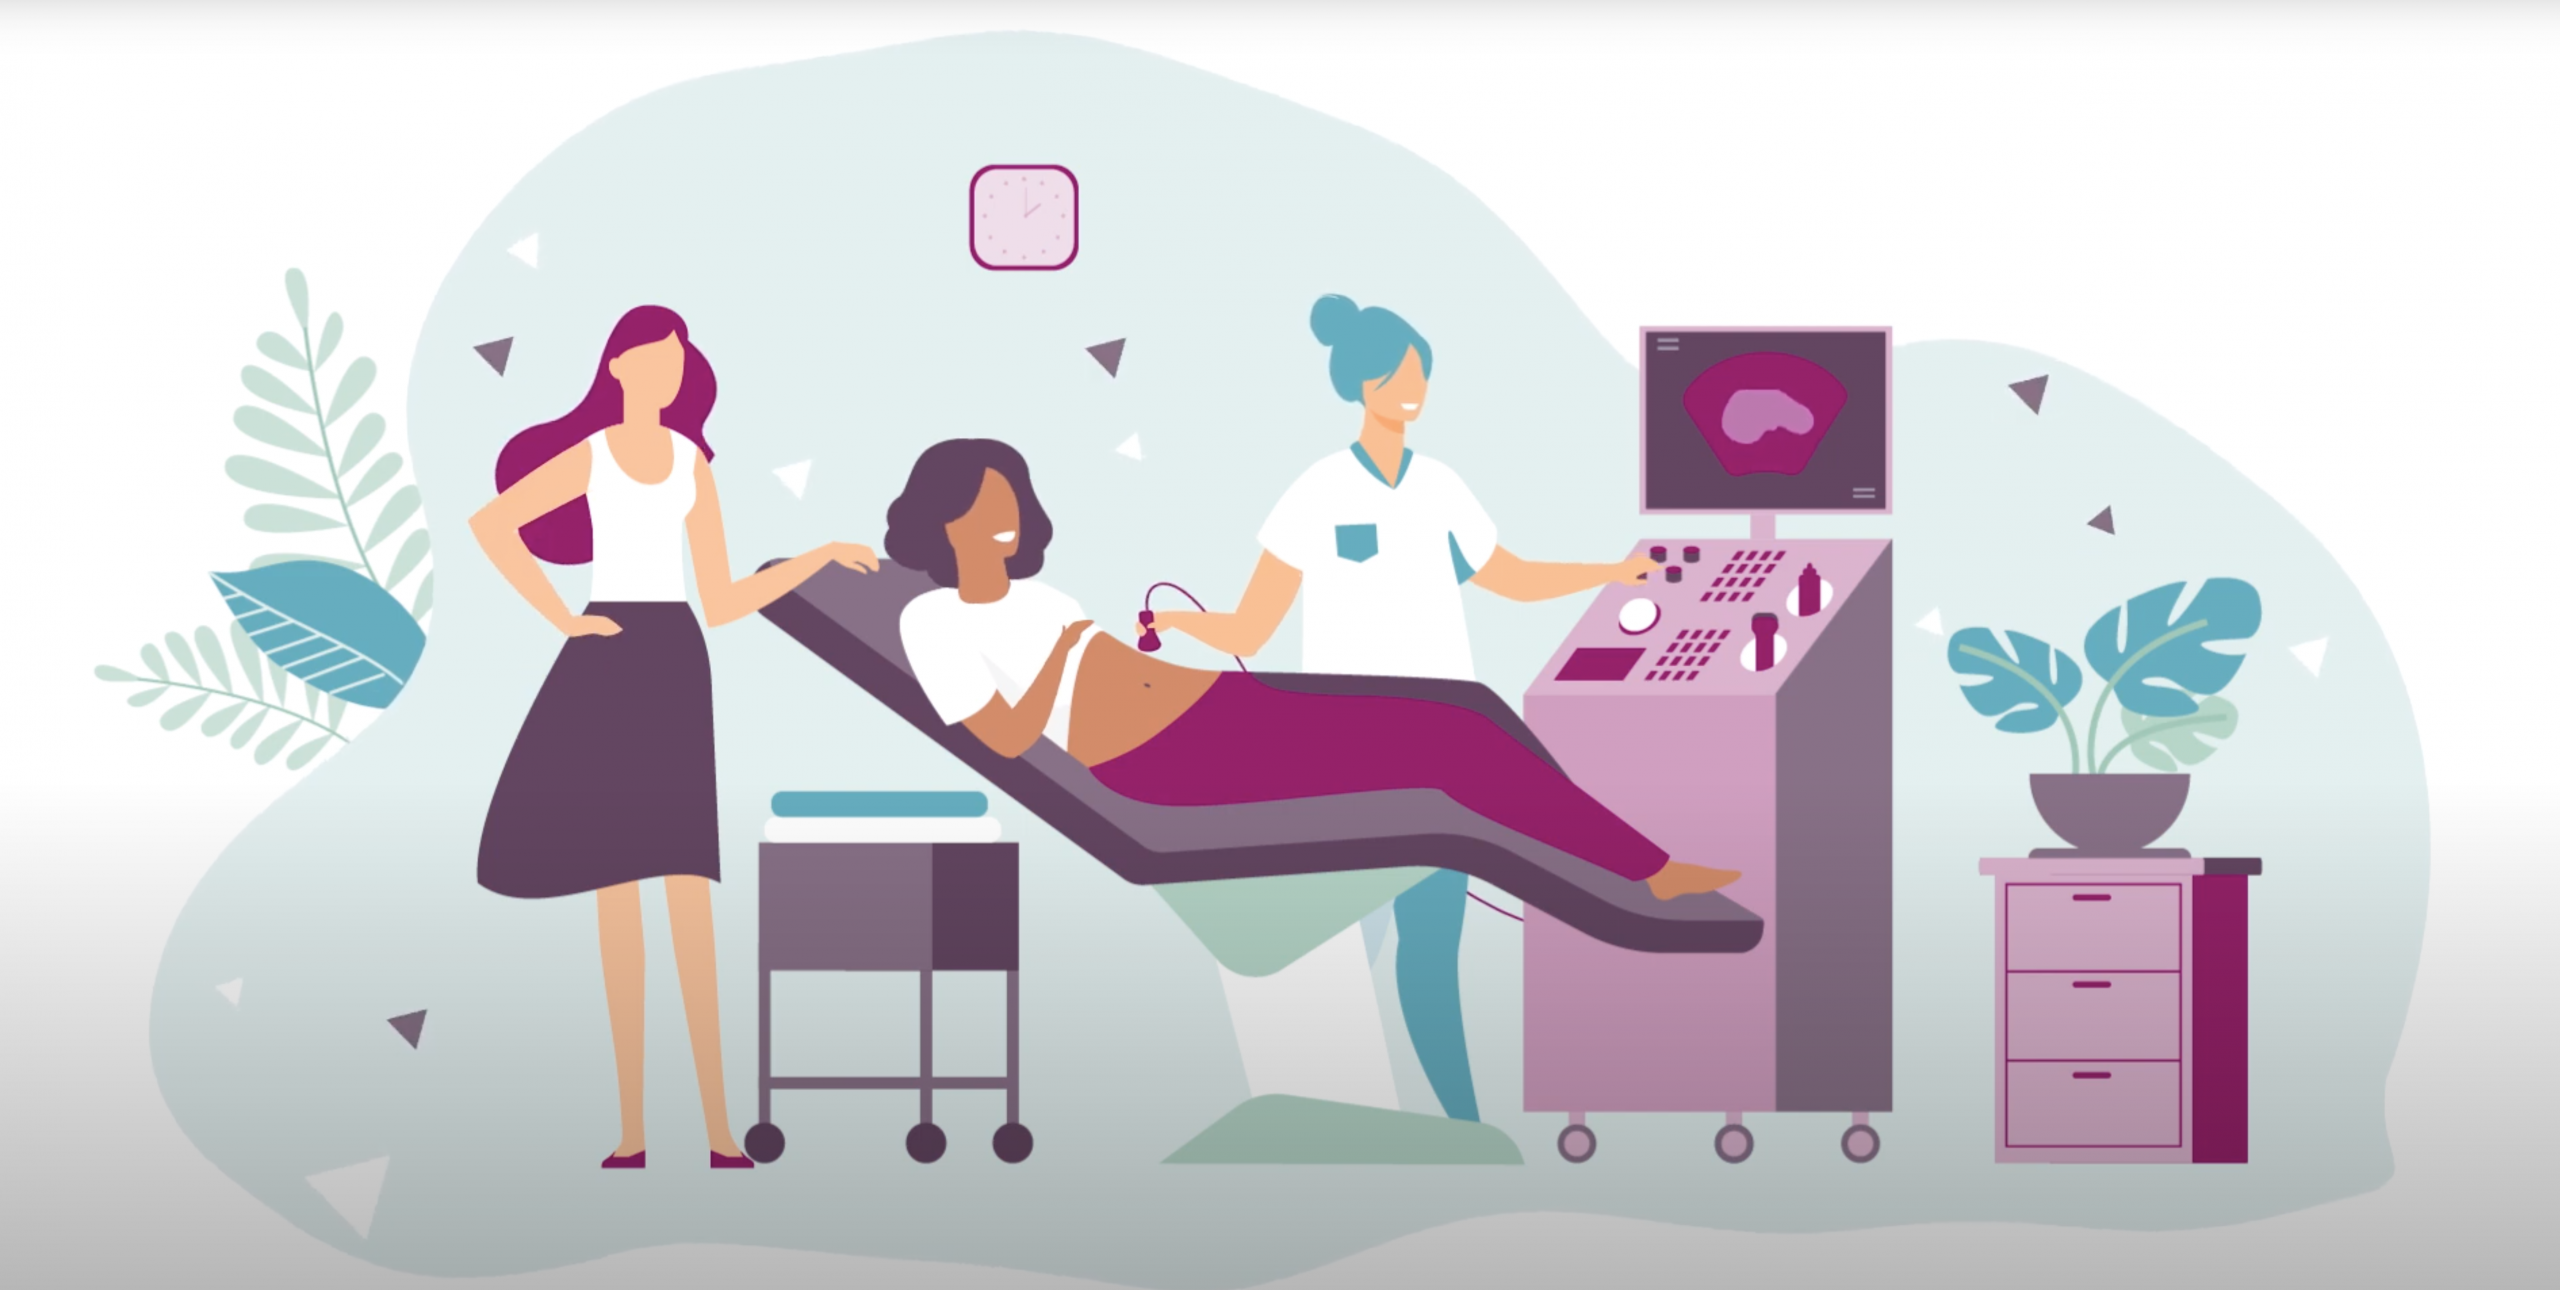 CPL animations make understanding fertility treatment easier | CPL